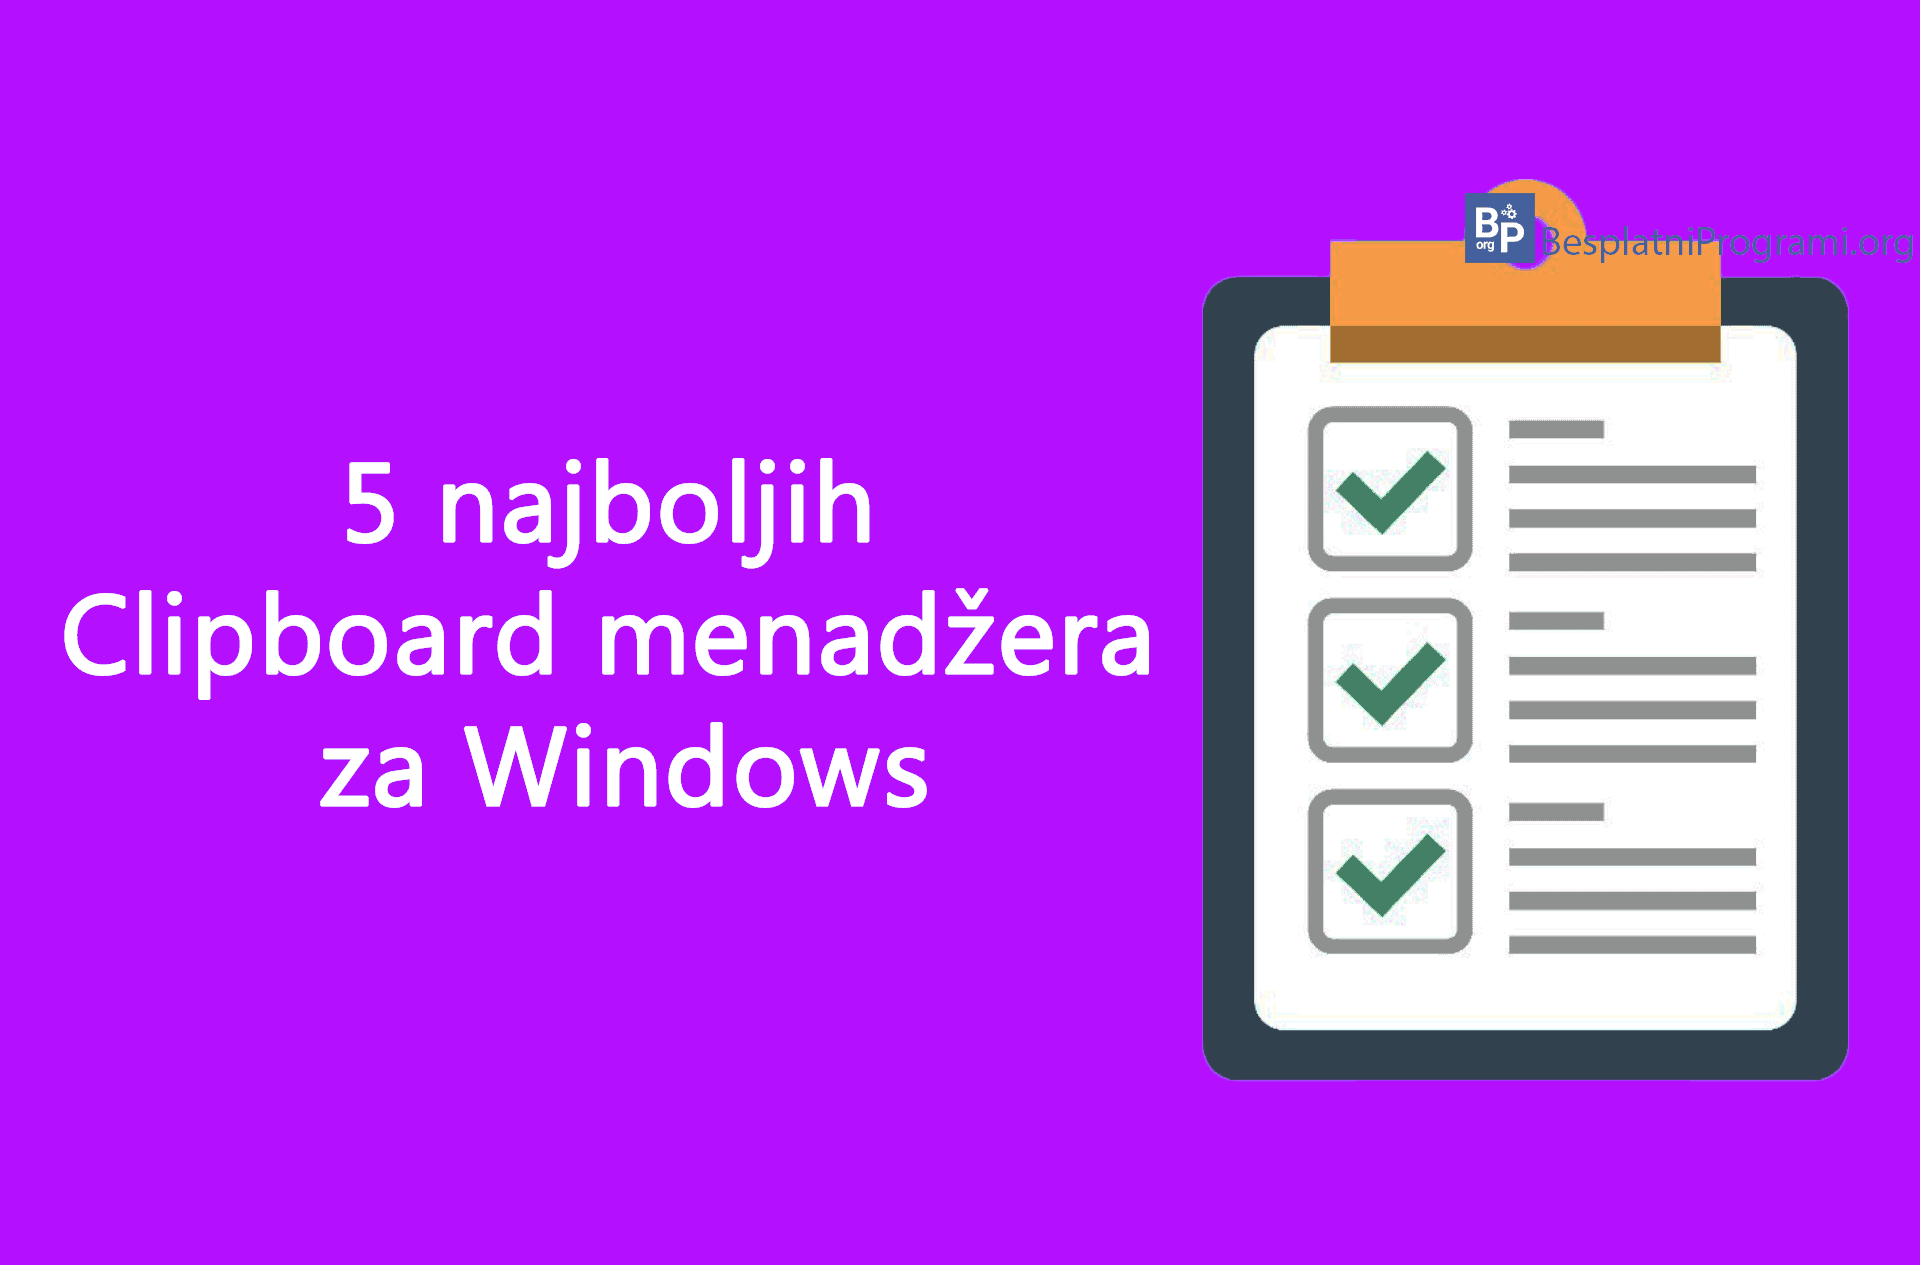 Pet najboljih Clipboard menadžera za Windows